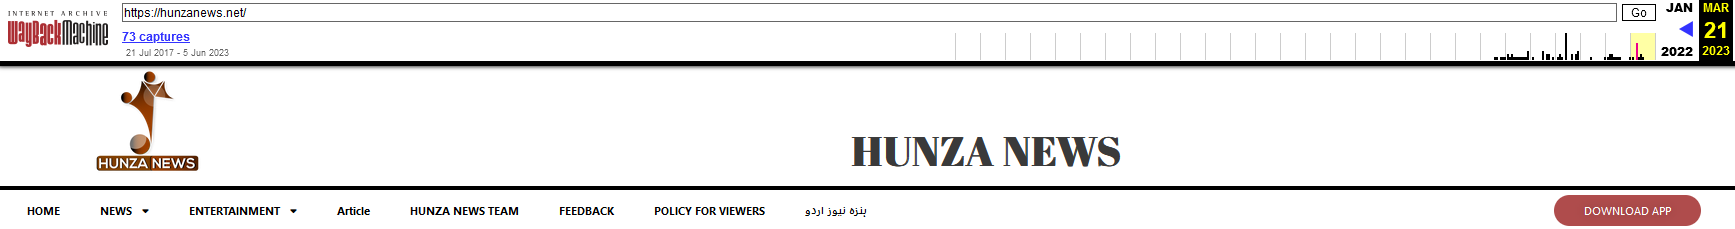 Abbildung 5: Hunza News-Website-Option zum Herunterladen der App wiederhergestellt